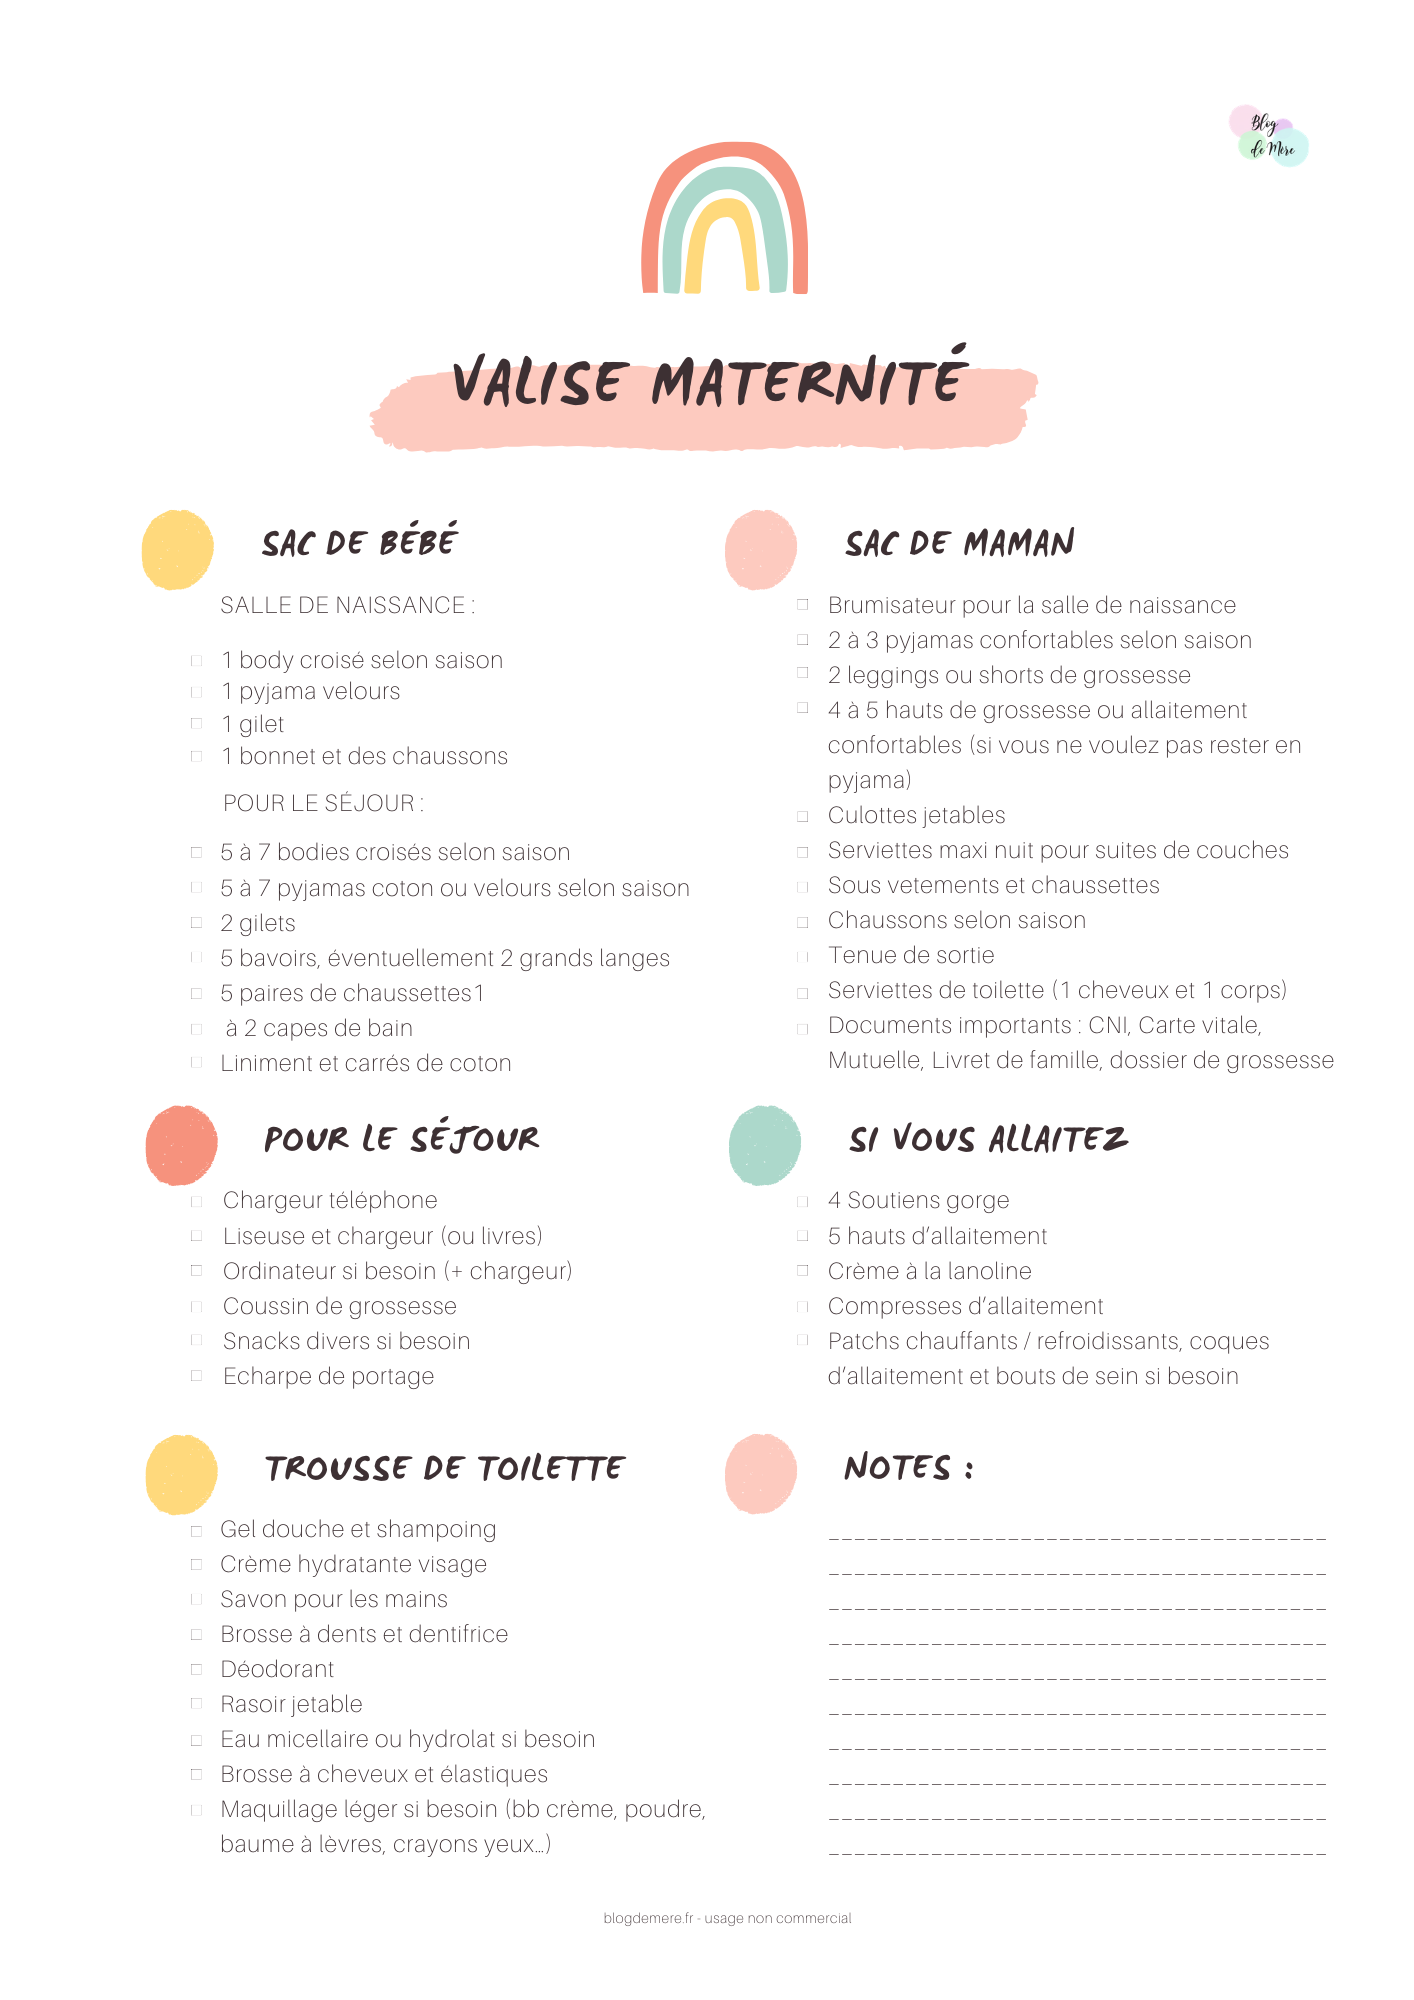 Valise maternite liste complete